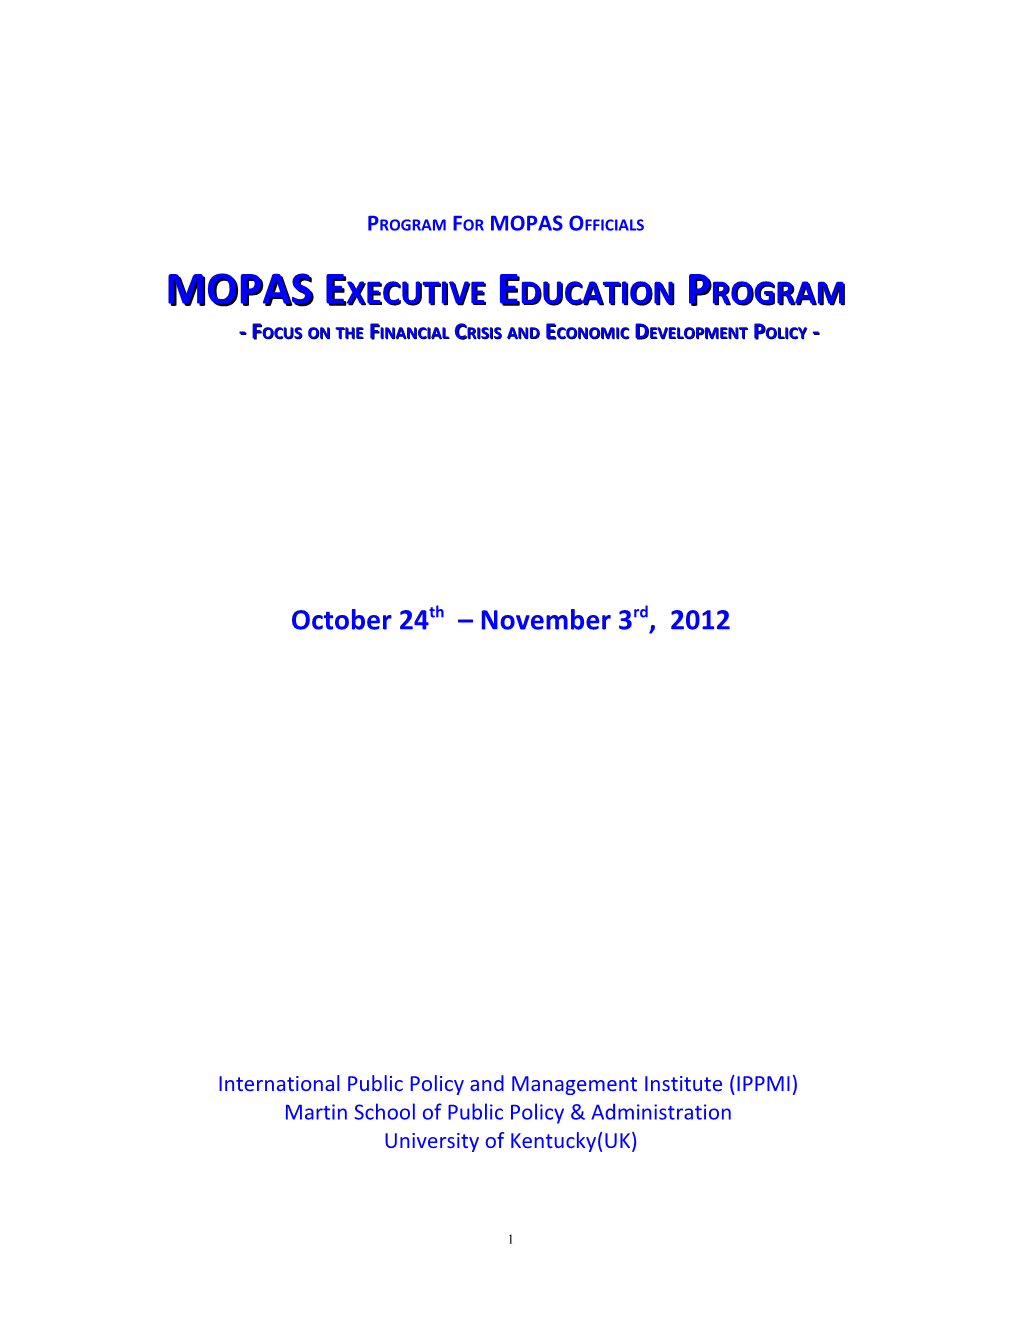 Program for MOPAS Officials